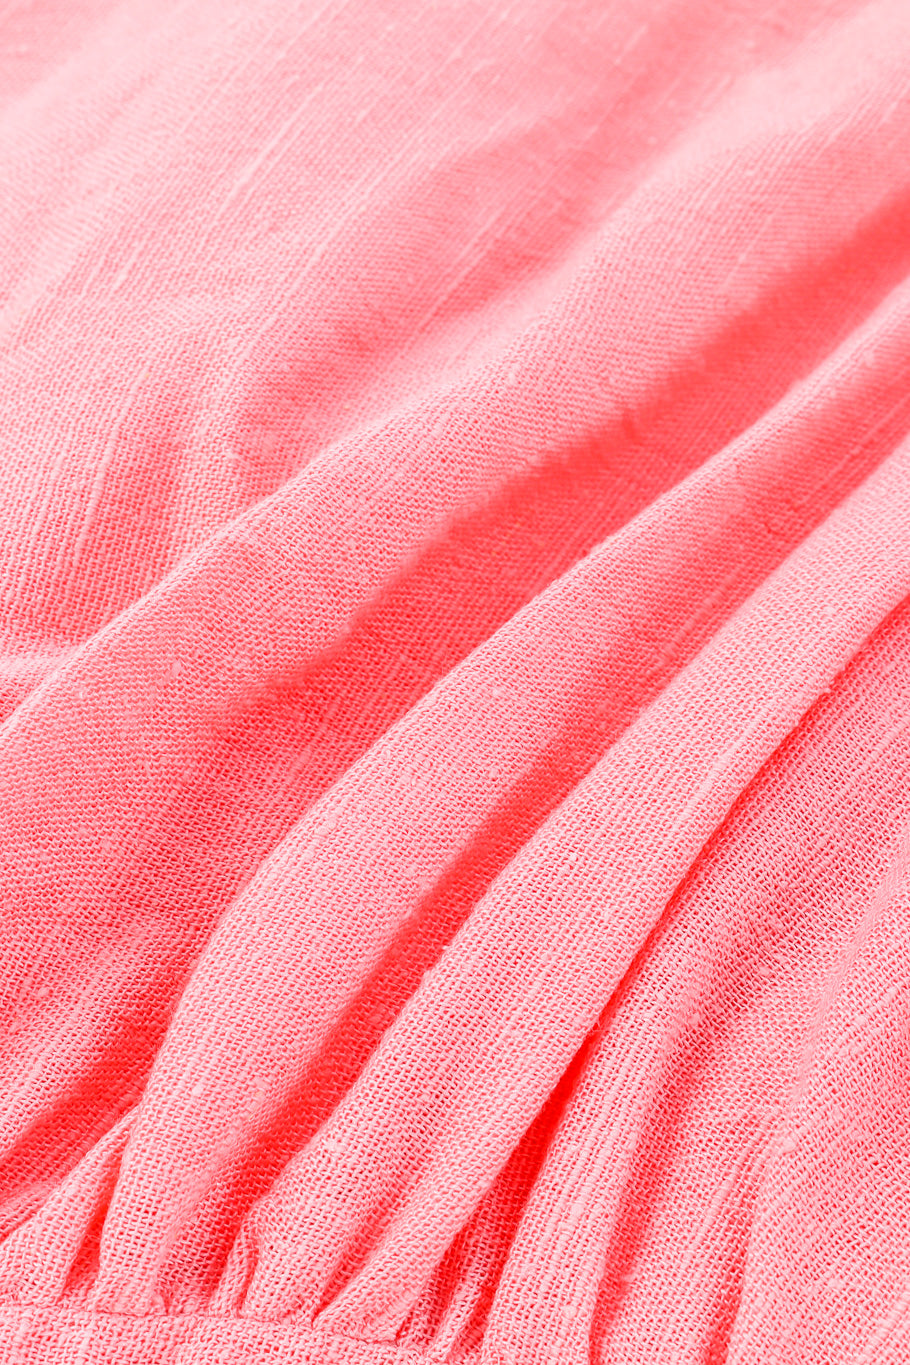 Prada sequin midi dress slubbed fabric detail @recessla